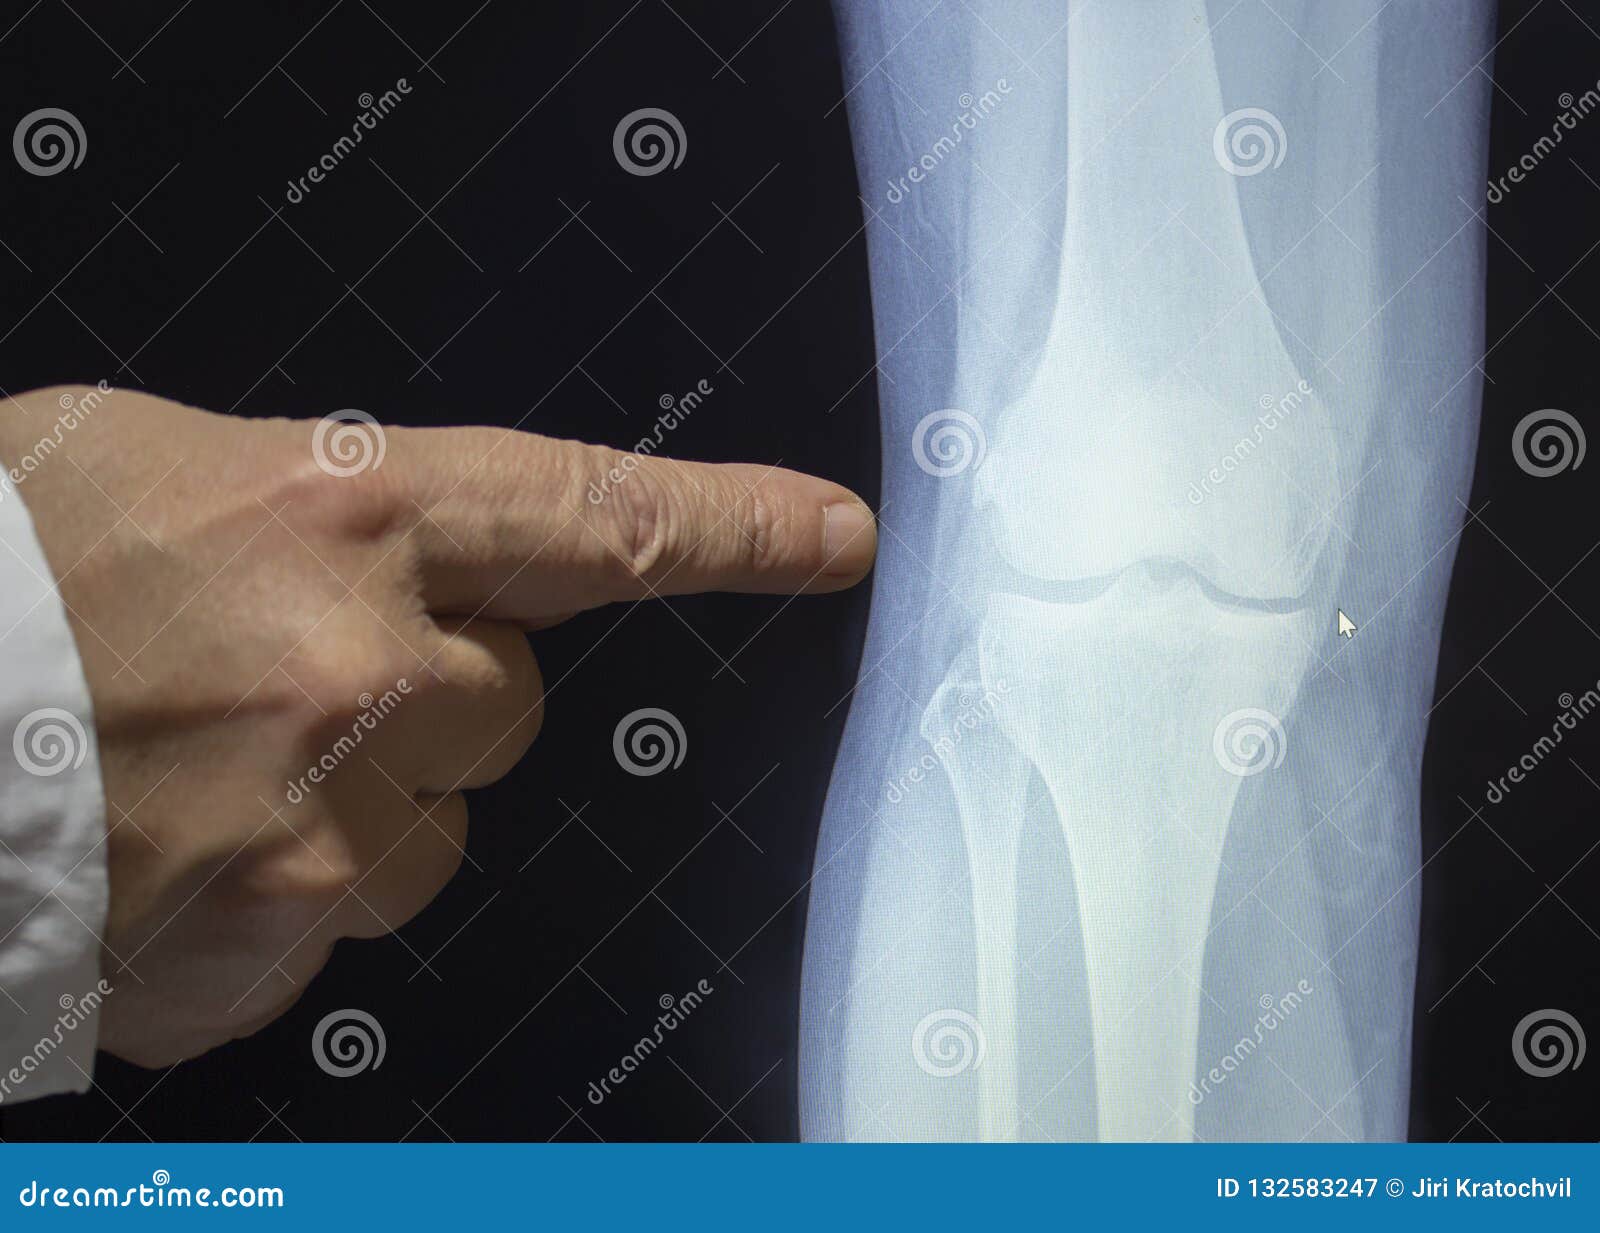 Трещина в коленной. Рентген колена. Рентген коленного сустава. Снимки коленного сустава.